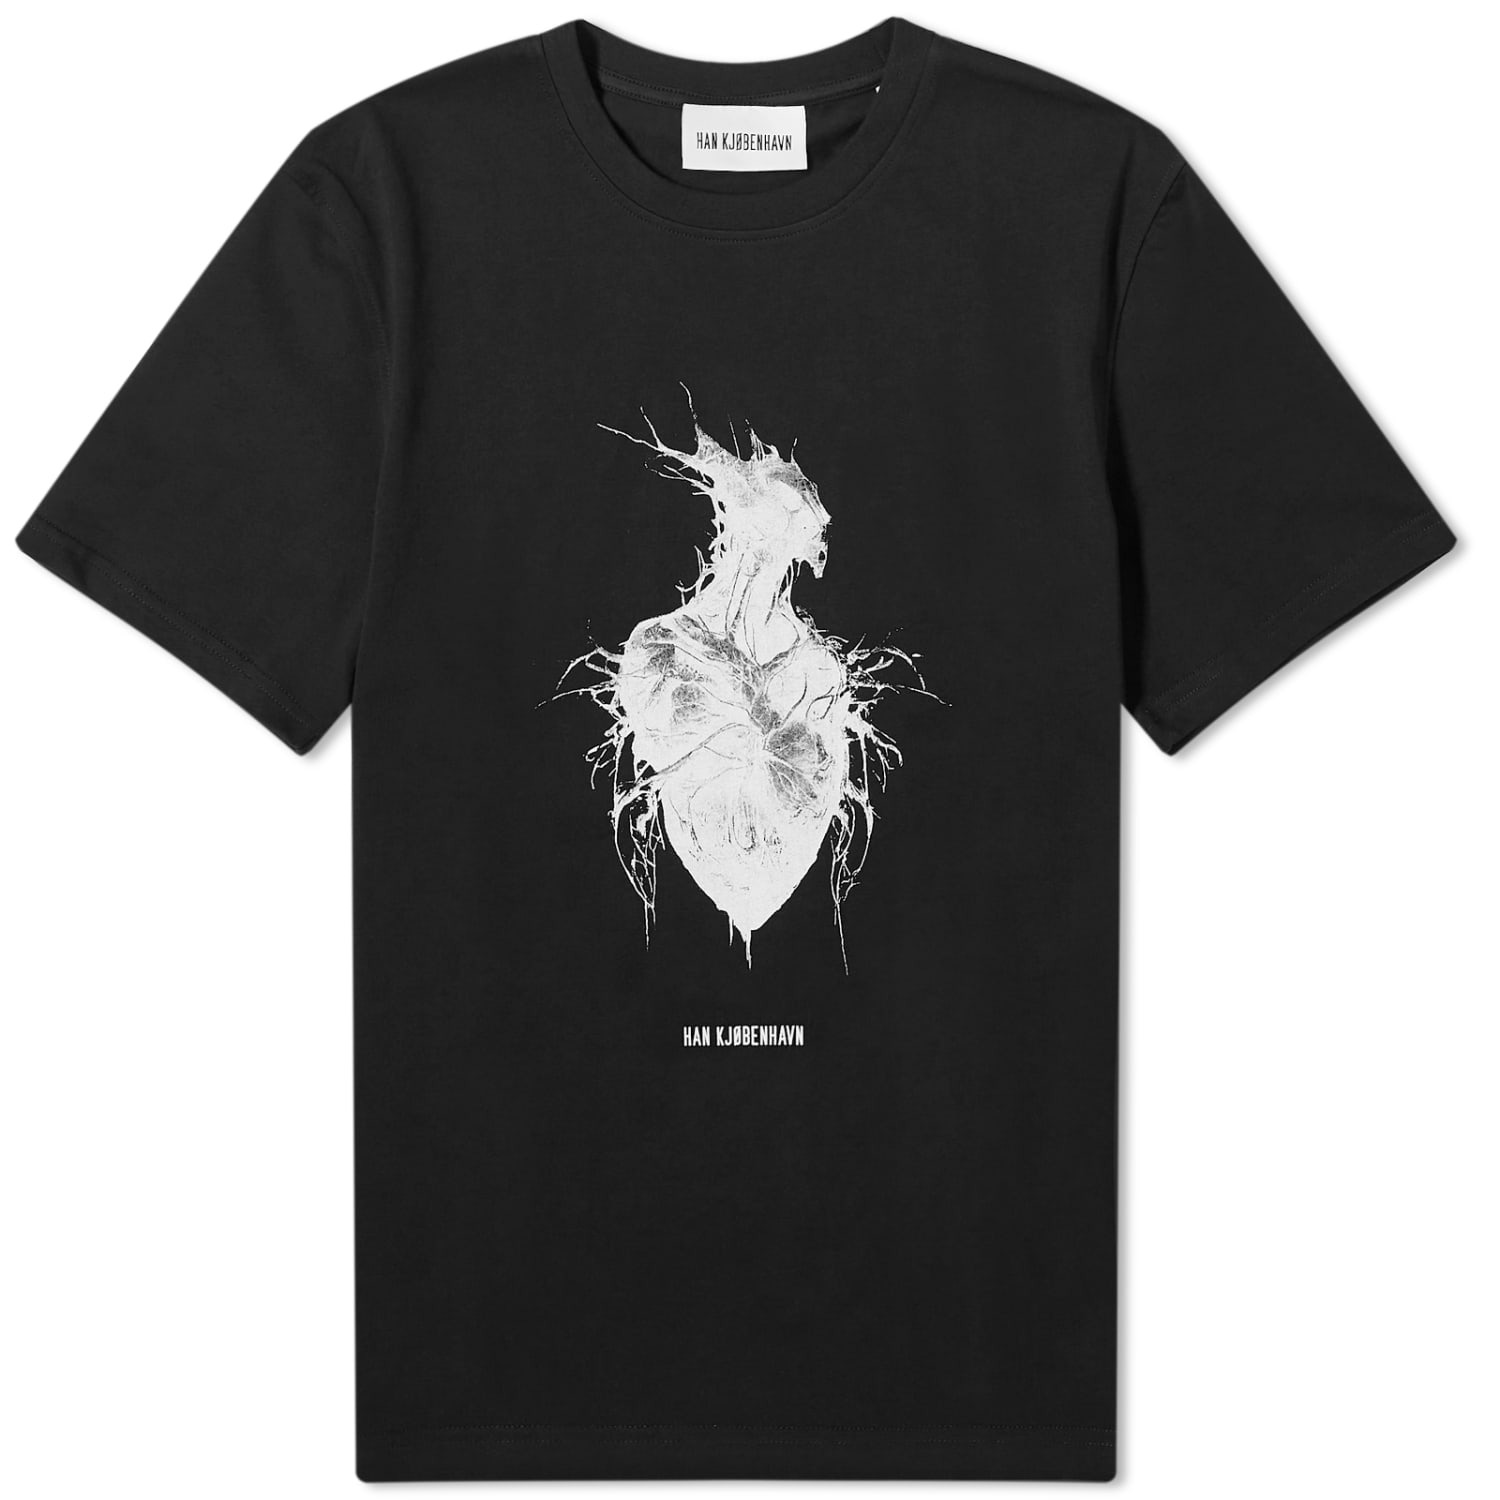 Футболка Han Kjobenhavn Heart Monster Print, черный худи han kjobenhavn силуэт свободный размер s черный